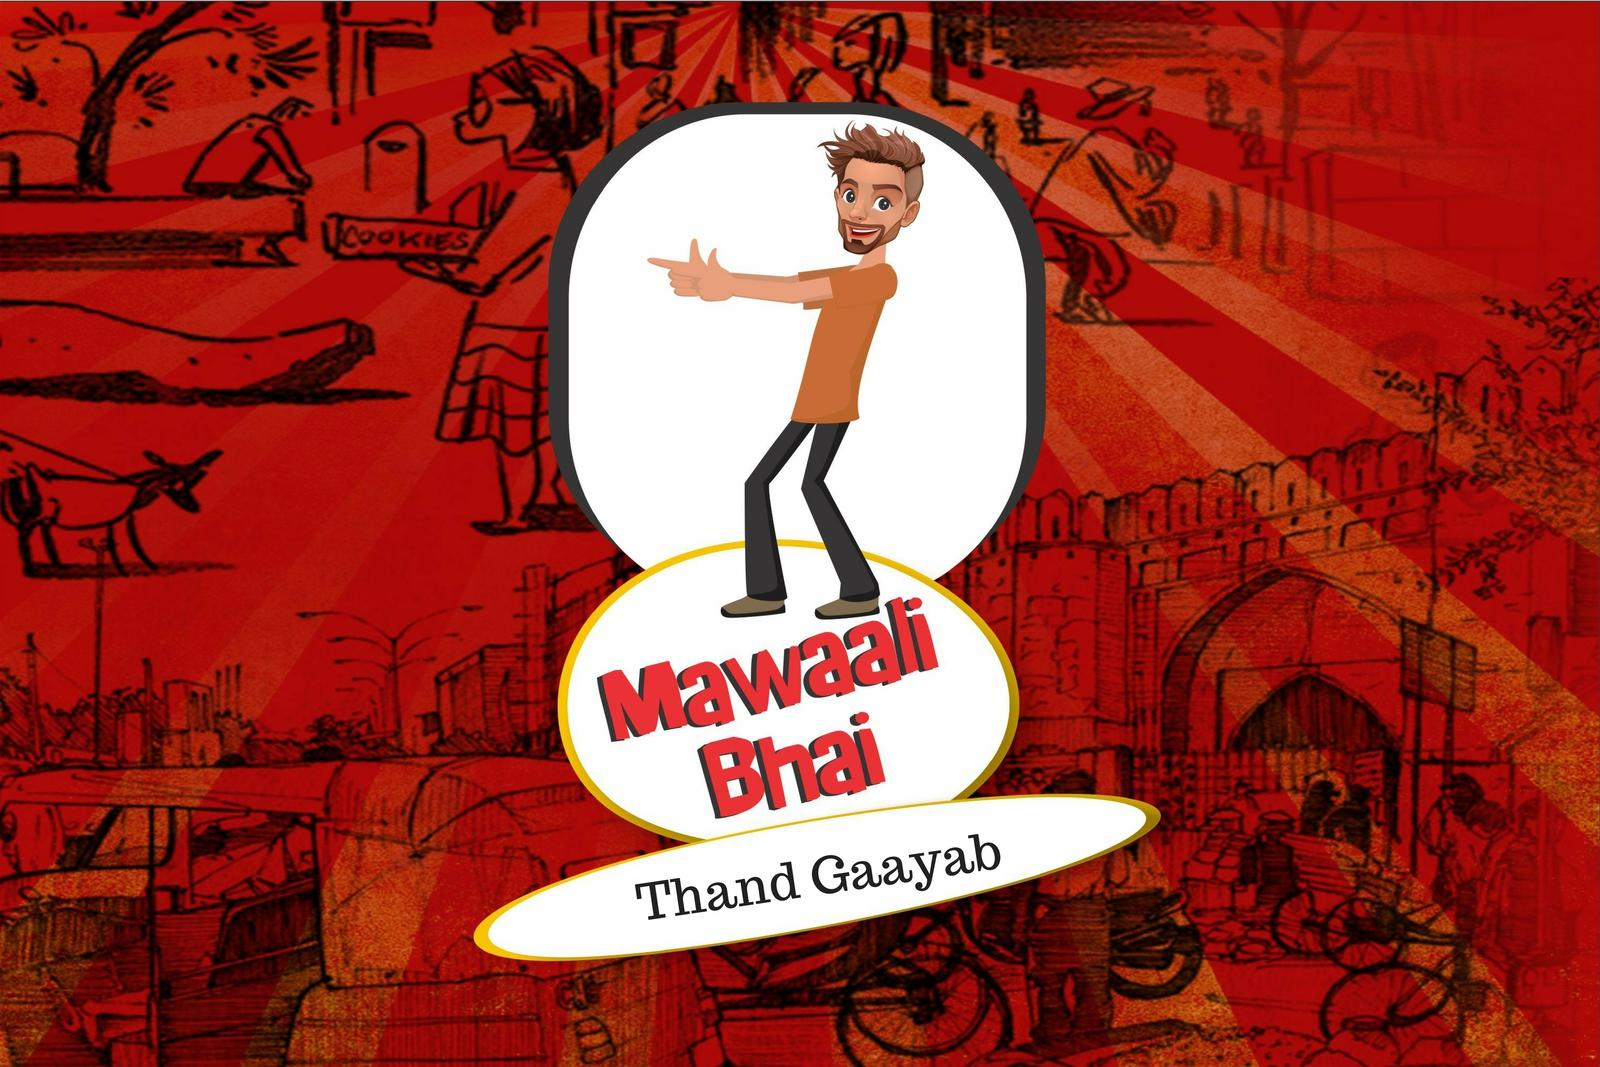 Mawaali Bhai Mumbai mai Thand Gaayab